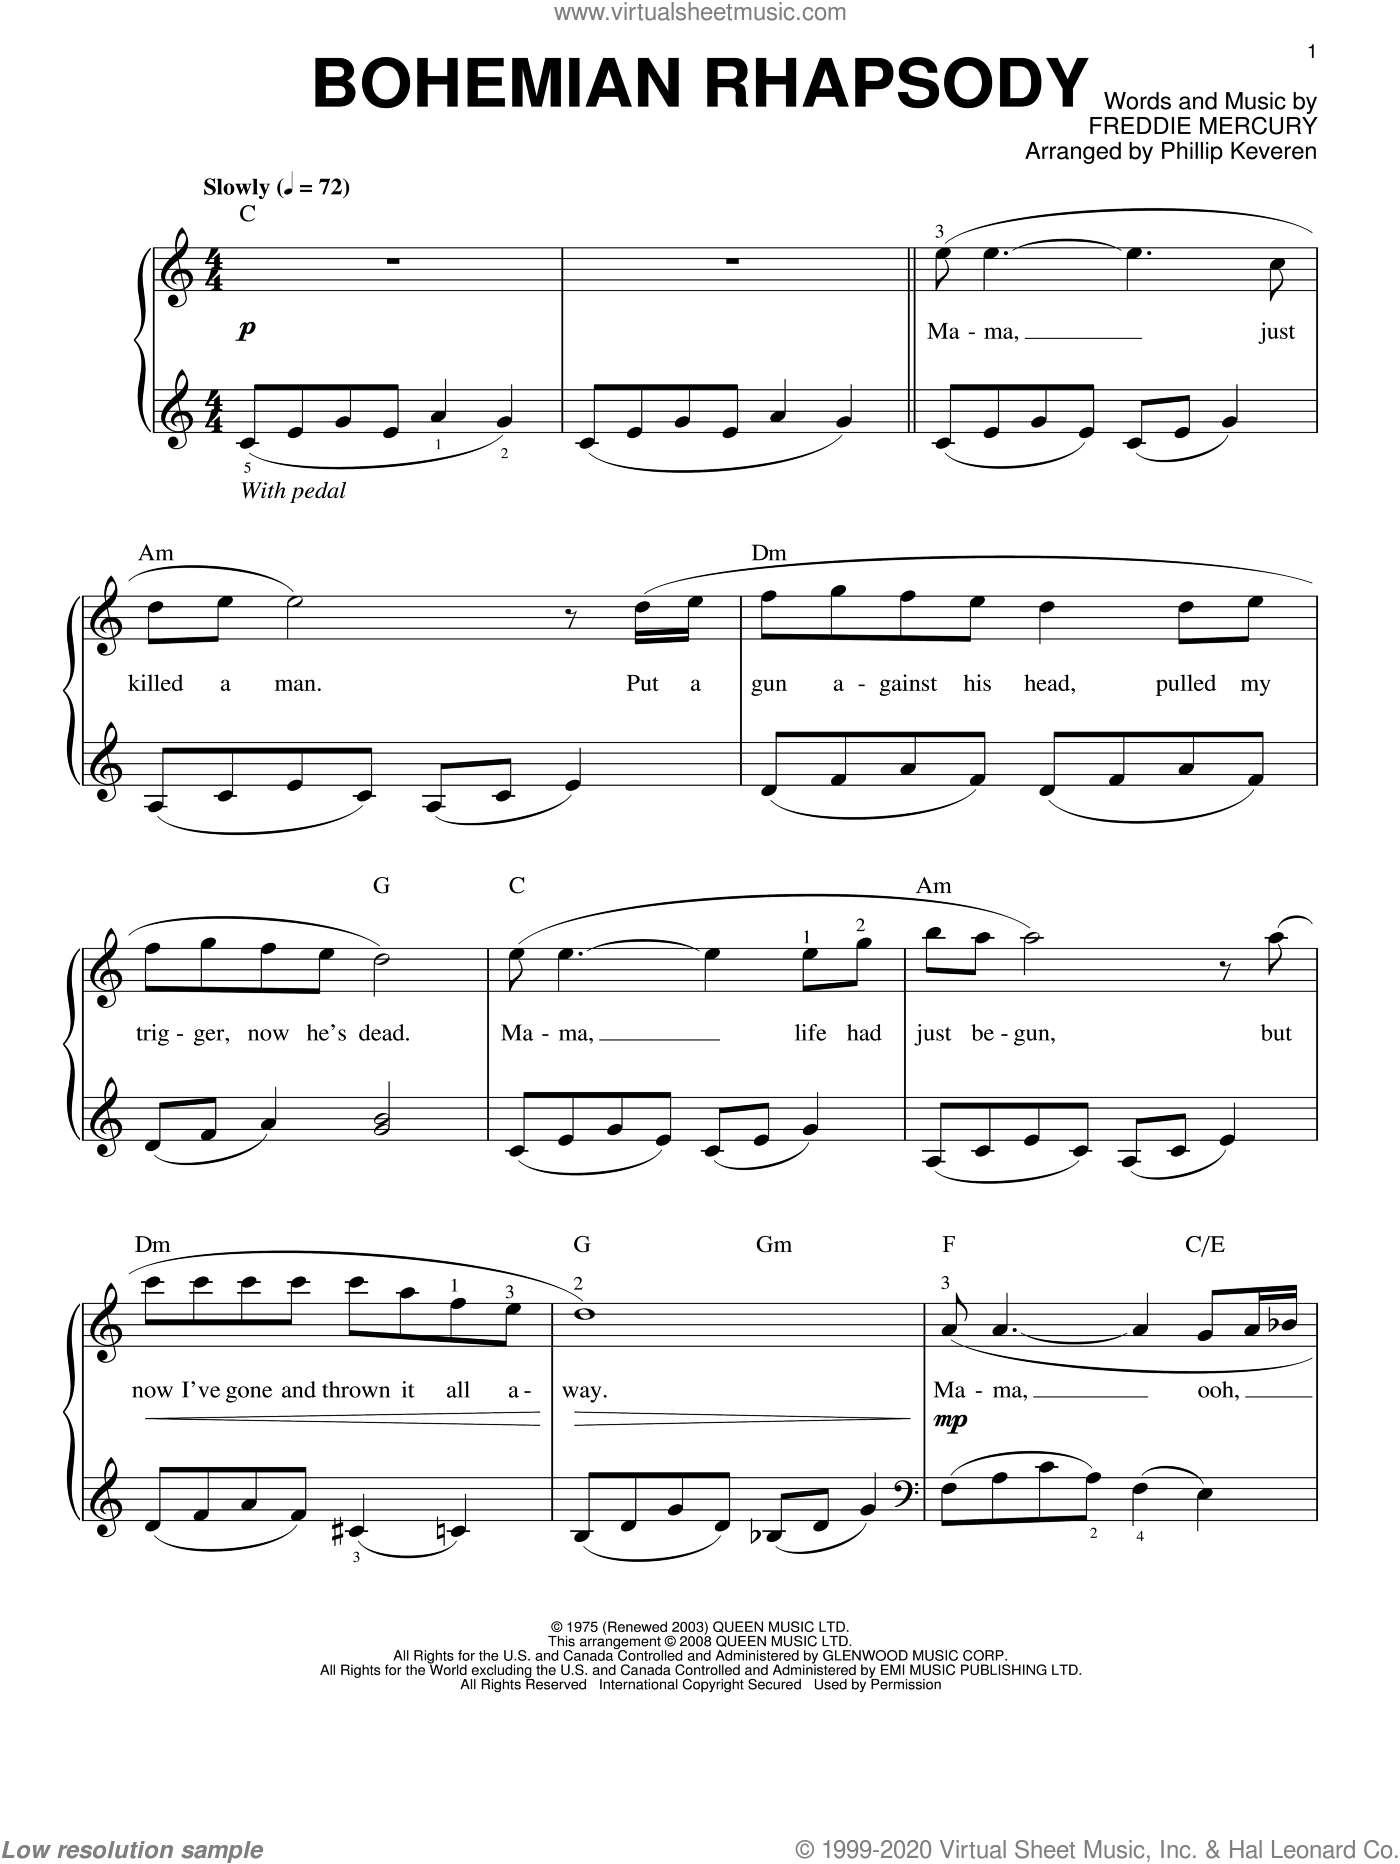 Bohemian rhapsody notes for piano pdf